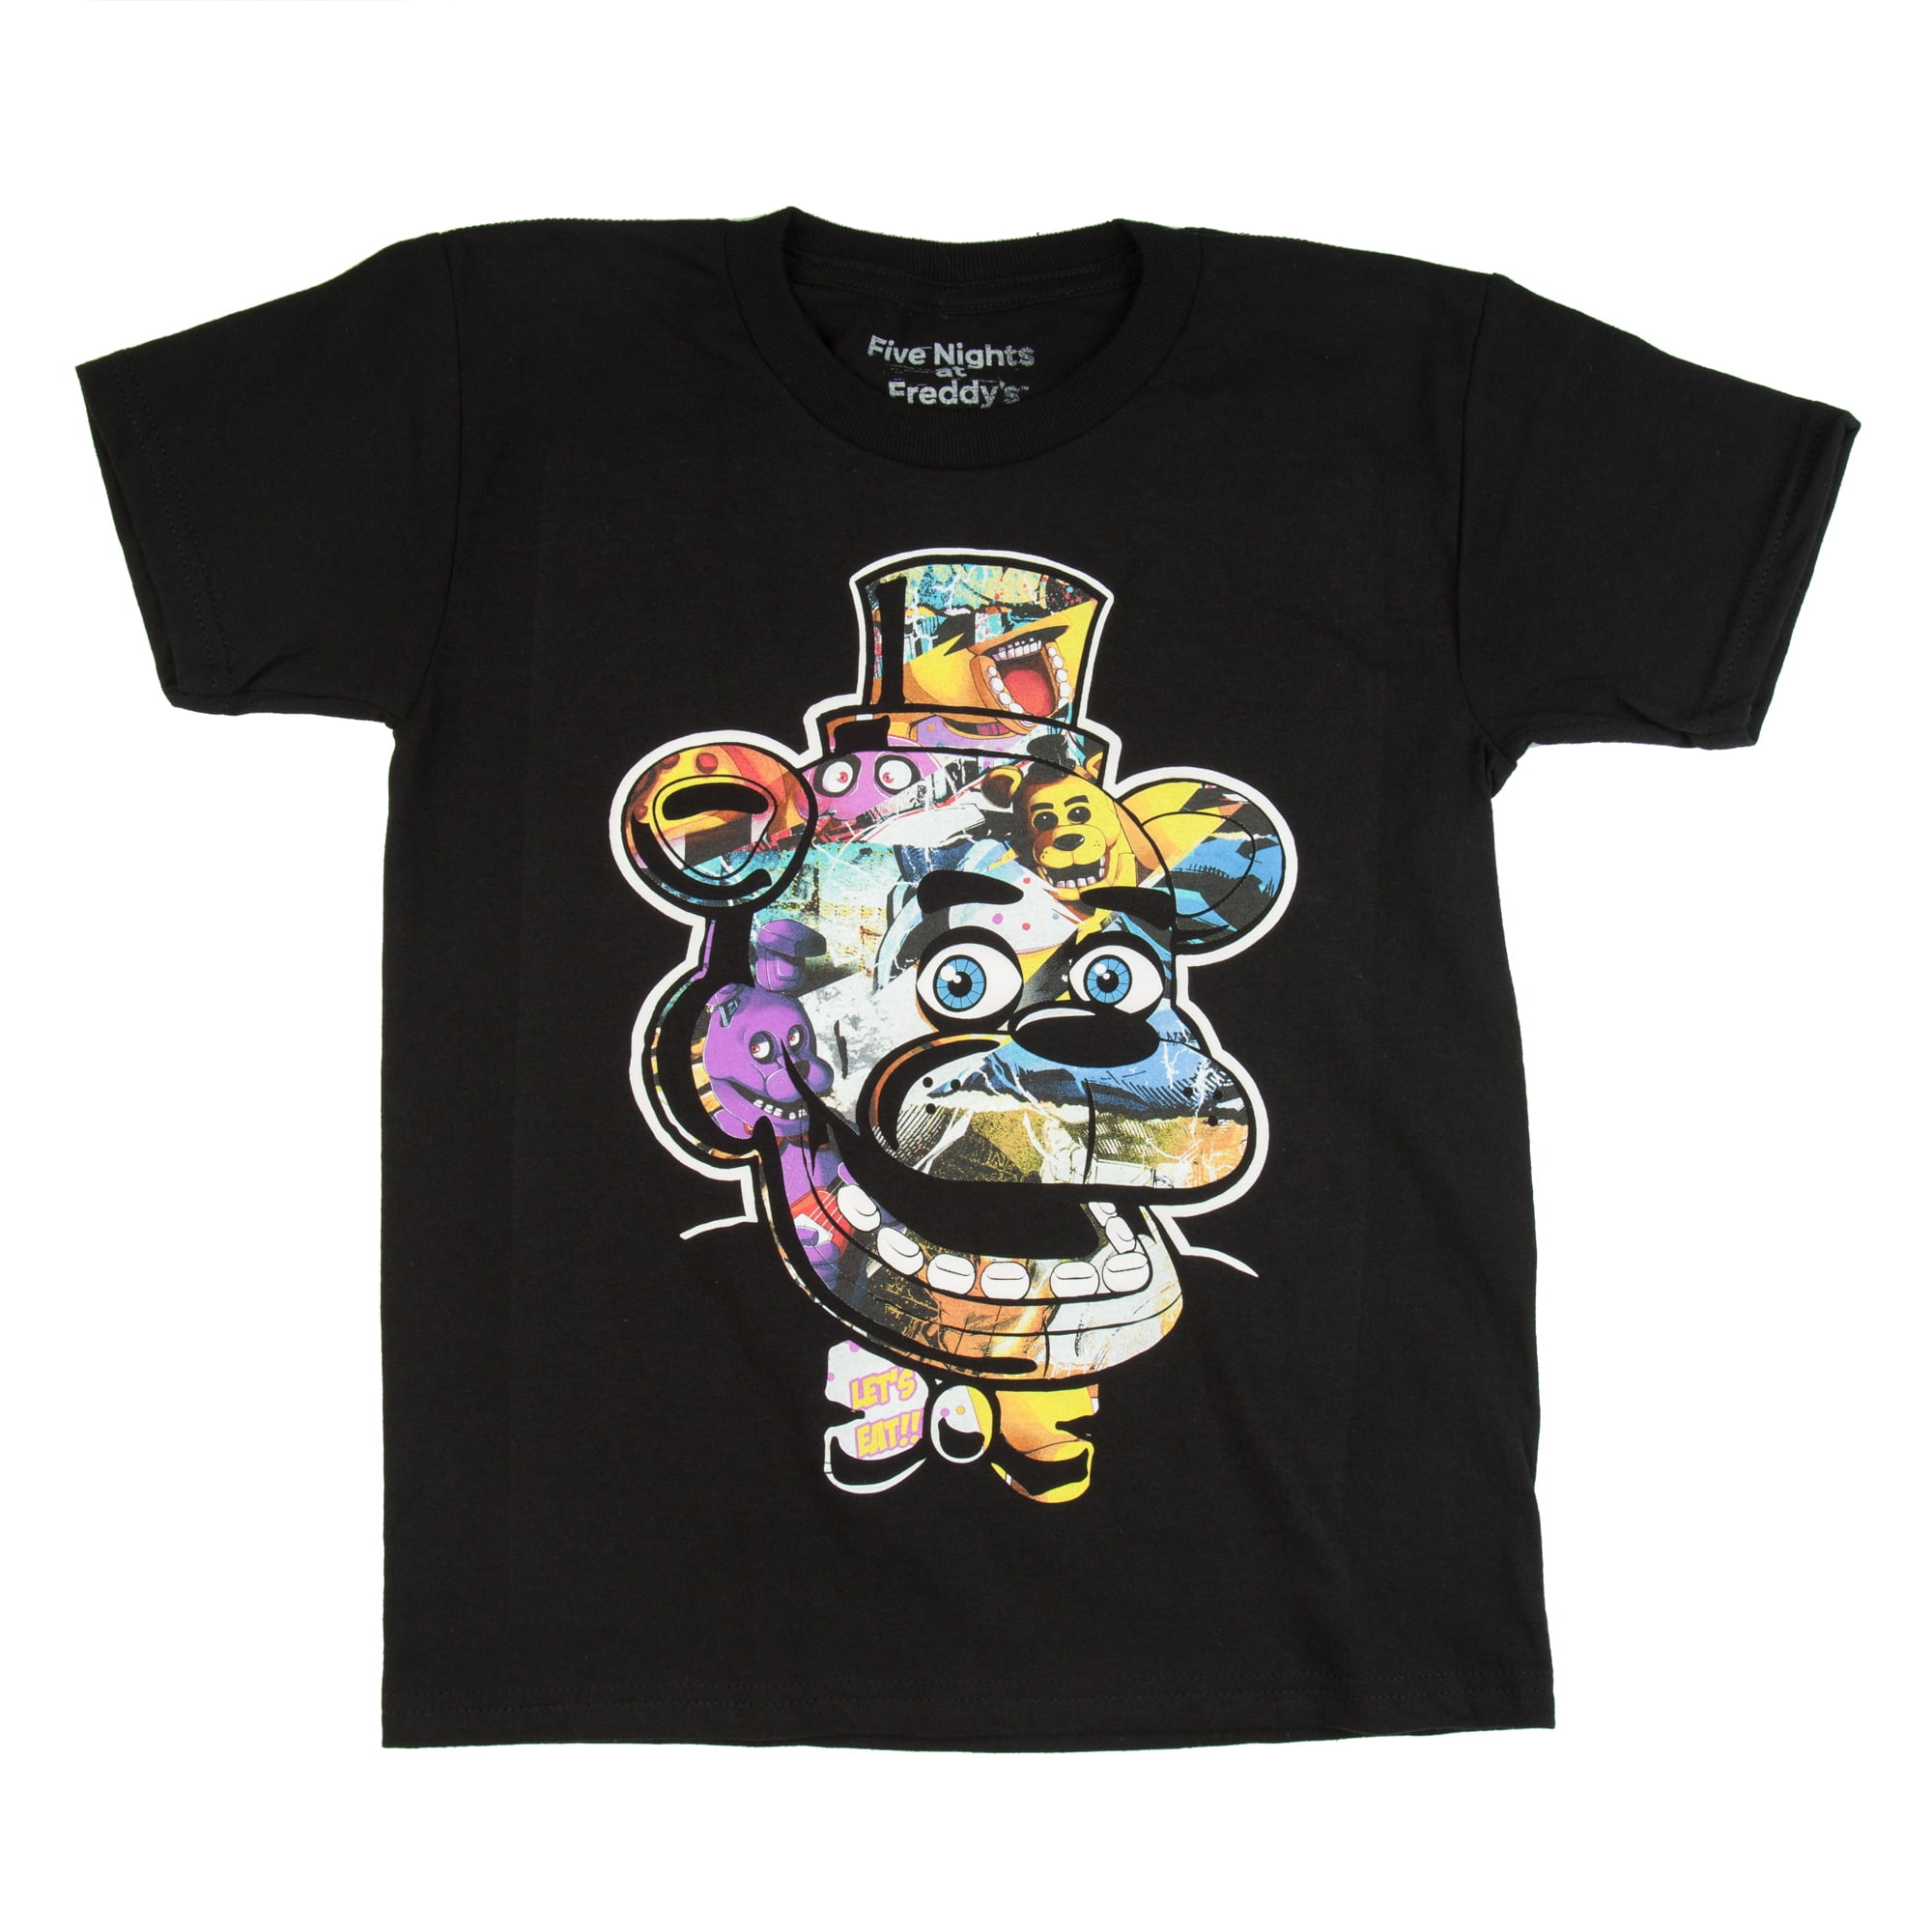 Five Nights At Freddy S Five Nights At Freddy S Trap Art Black Cotton T Shirt Sizes 4 16 Walmart Com Walmart Com